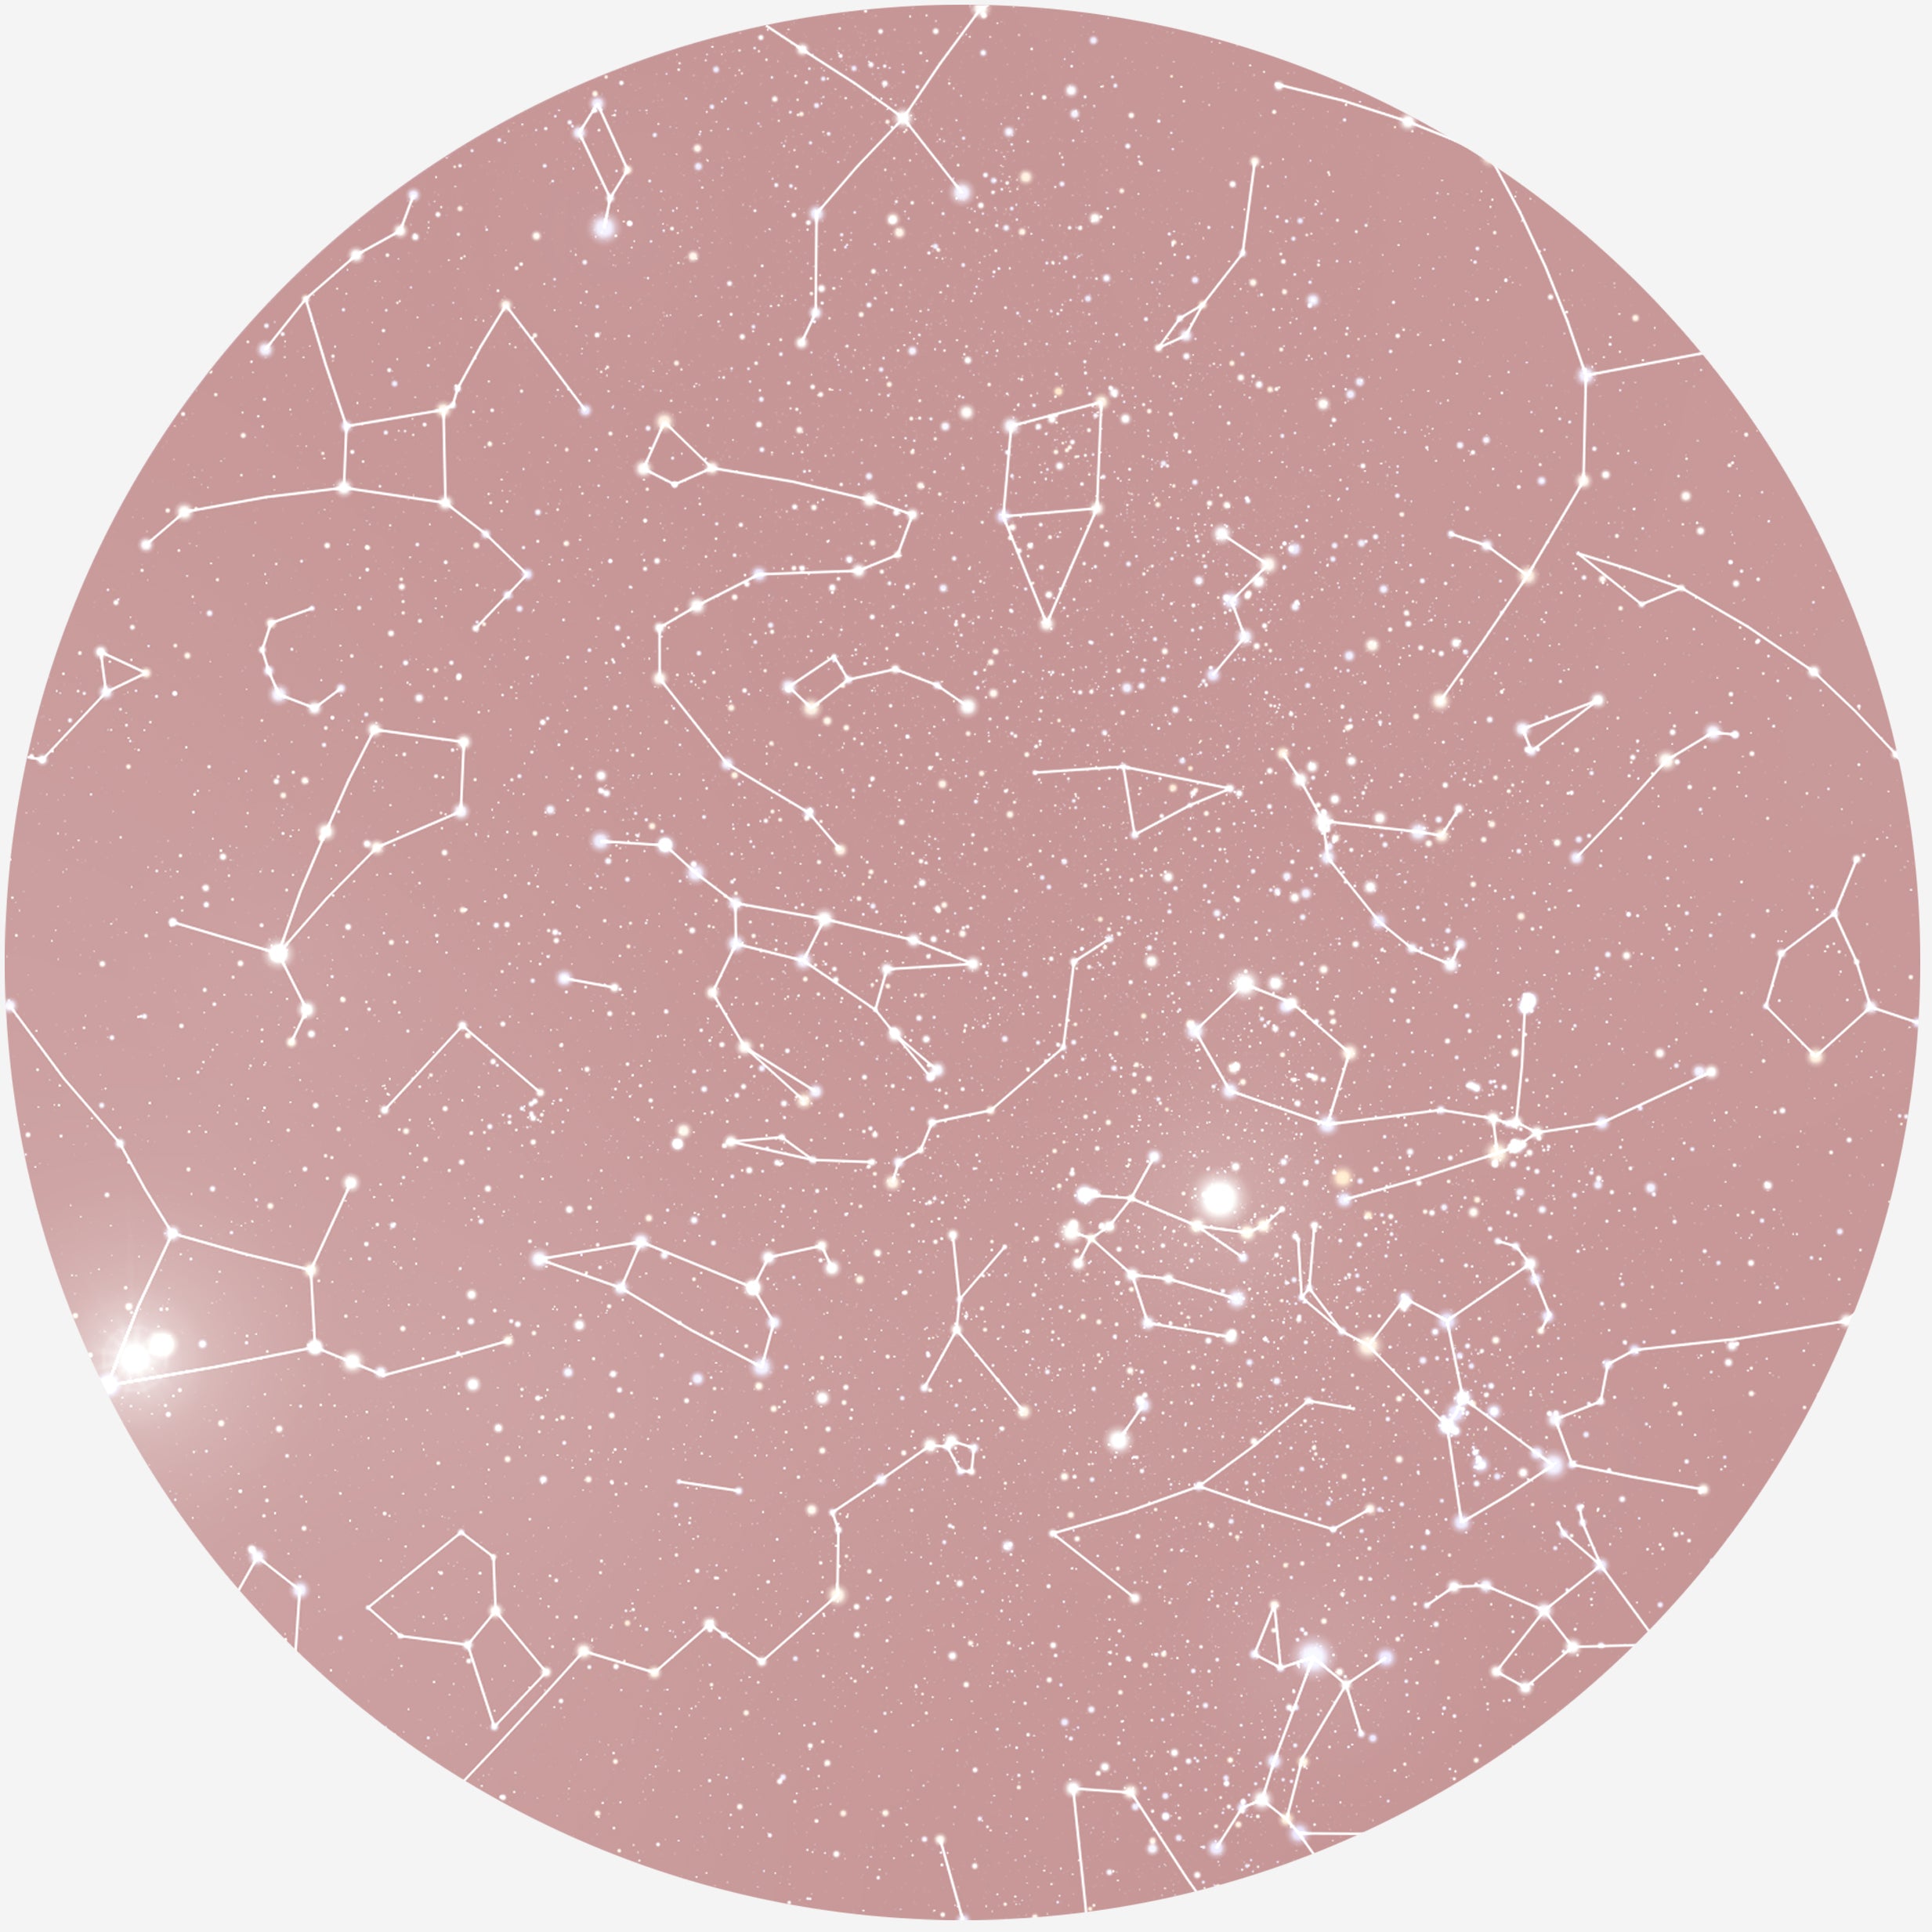 Se RUND PLAKAT MED PERSONLIG STJERNEHIMMEL (BLUSH)) - 20 cm / Stjernehimmel med stjernebilleder hos KISPUS